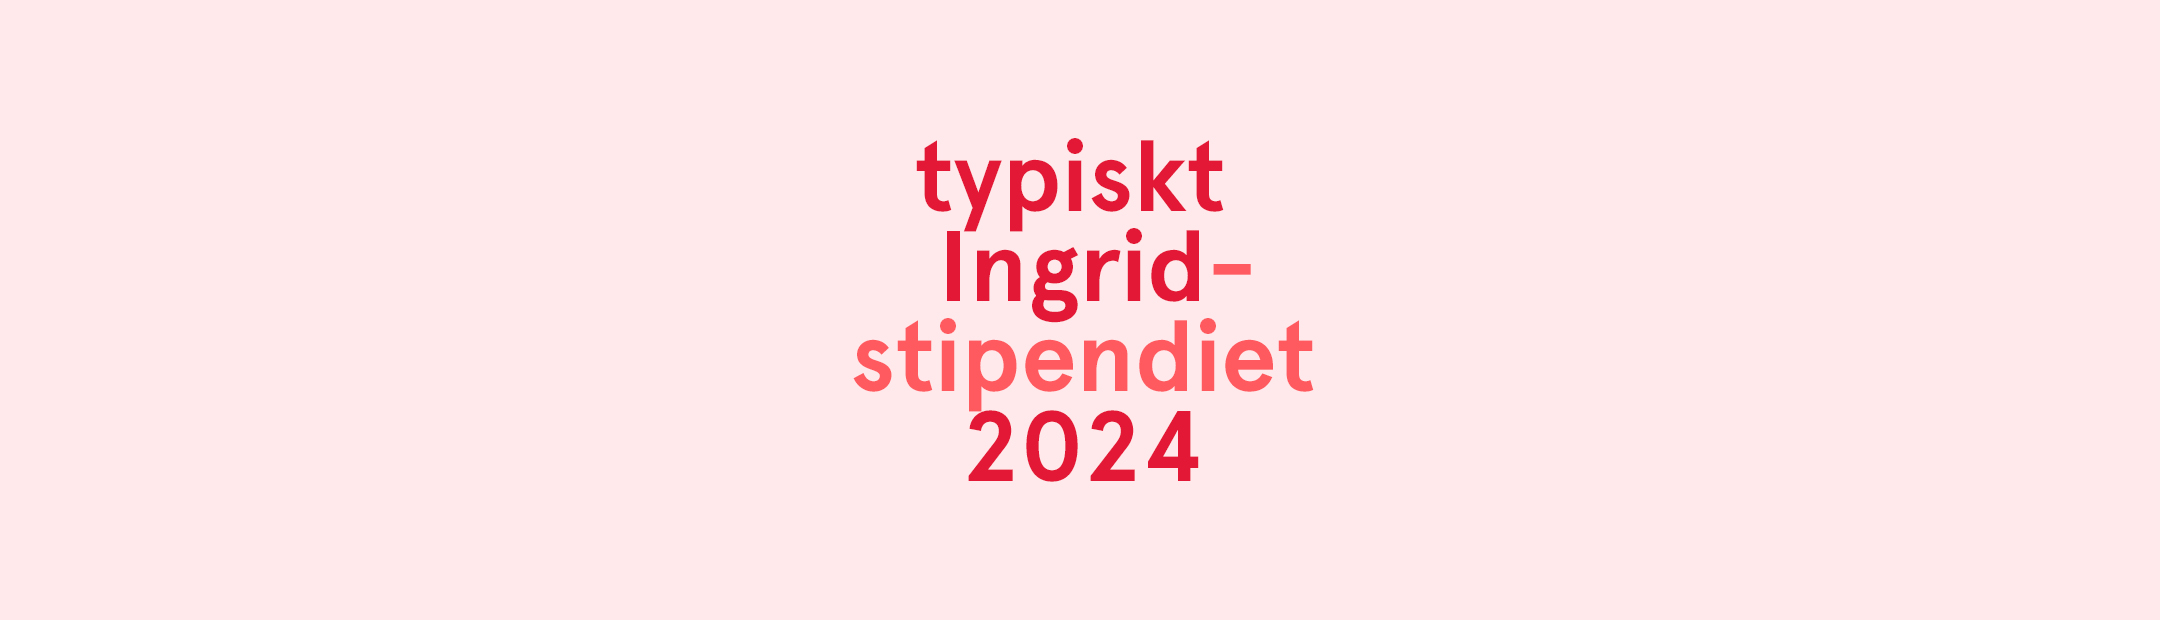 Friskis&Svettis Uppsala Typiskt Ingrid-stipendiet 2024